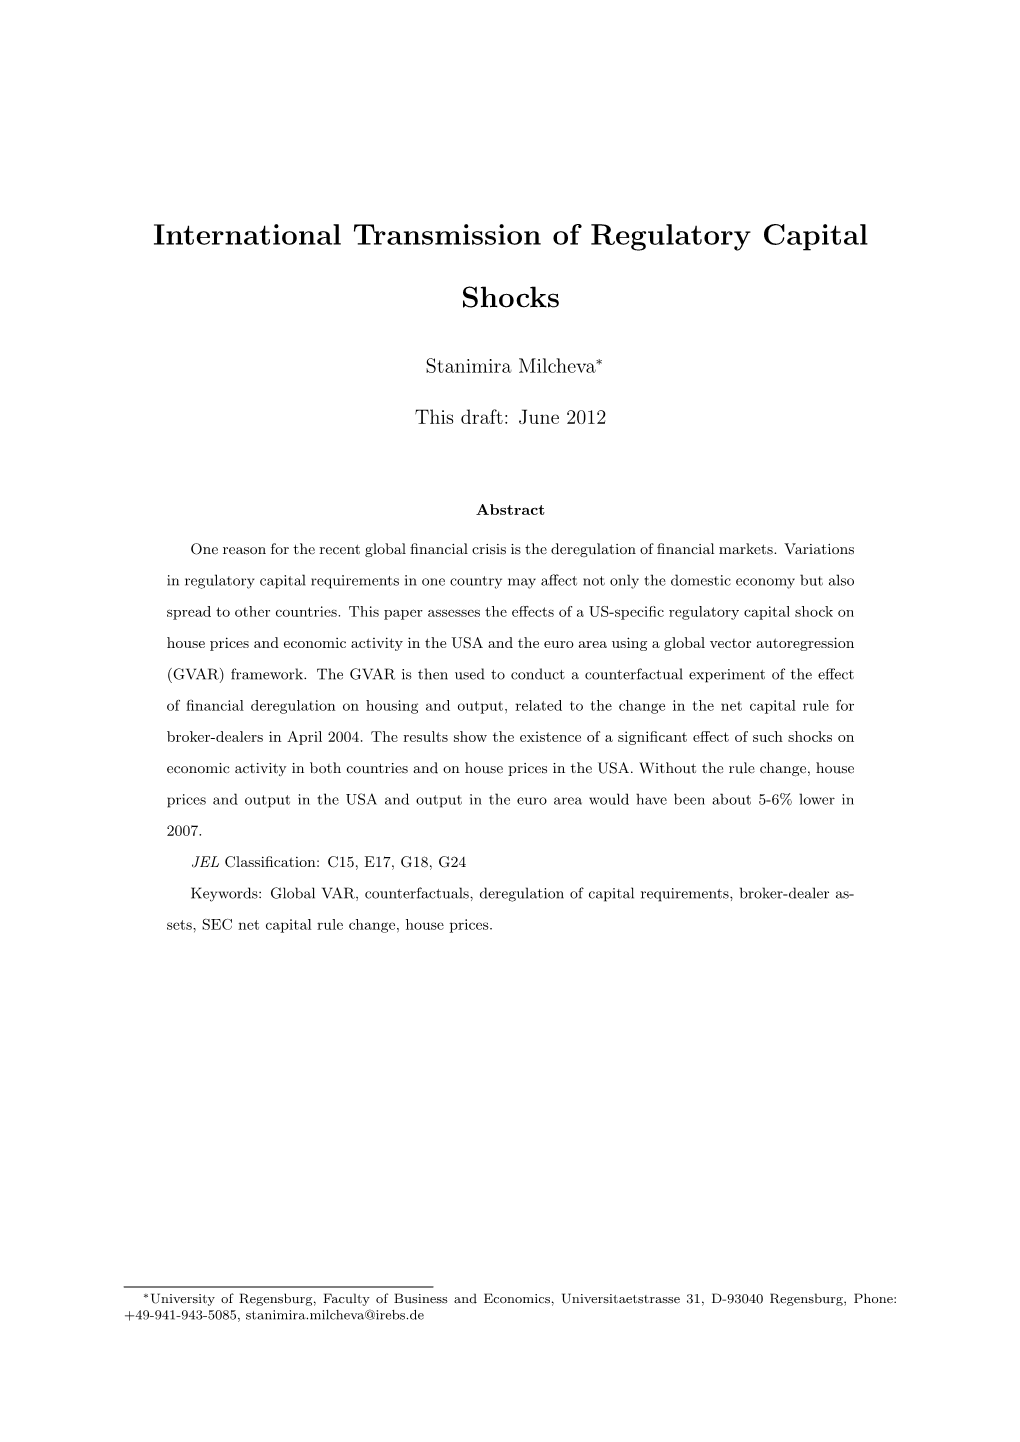 International Transmission of Regulatory Capital Shocks